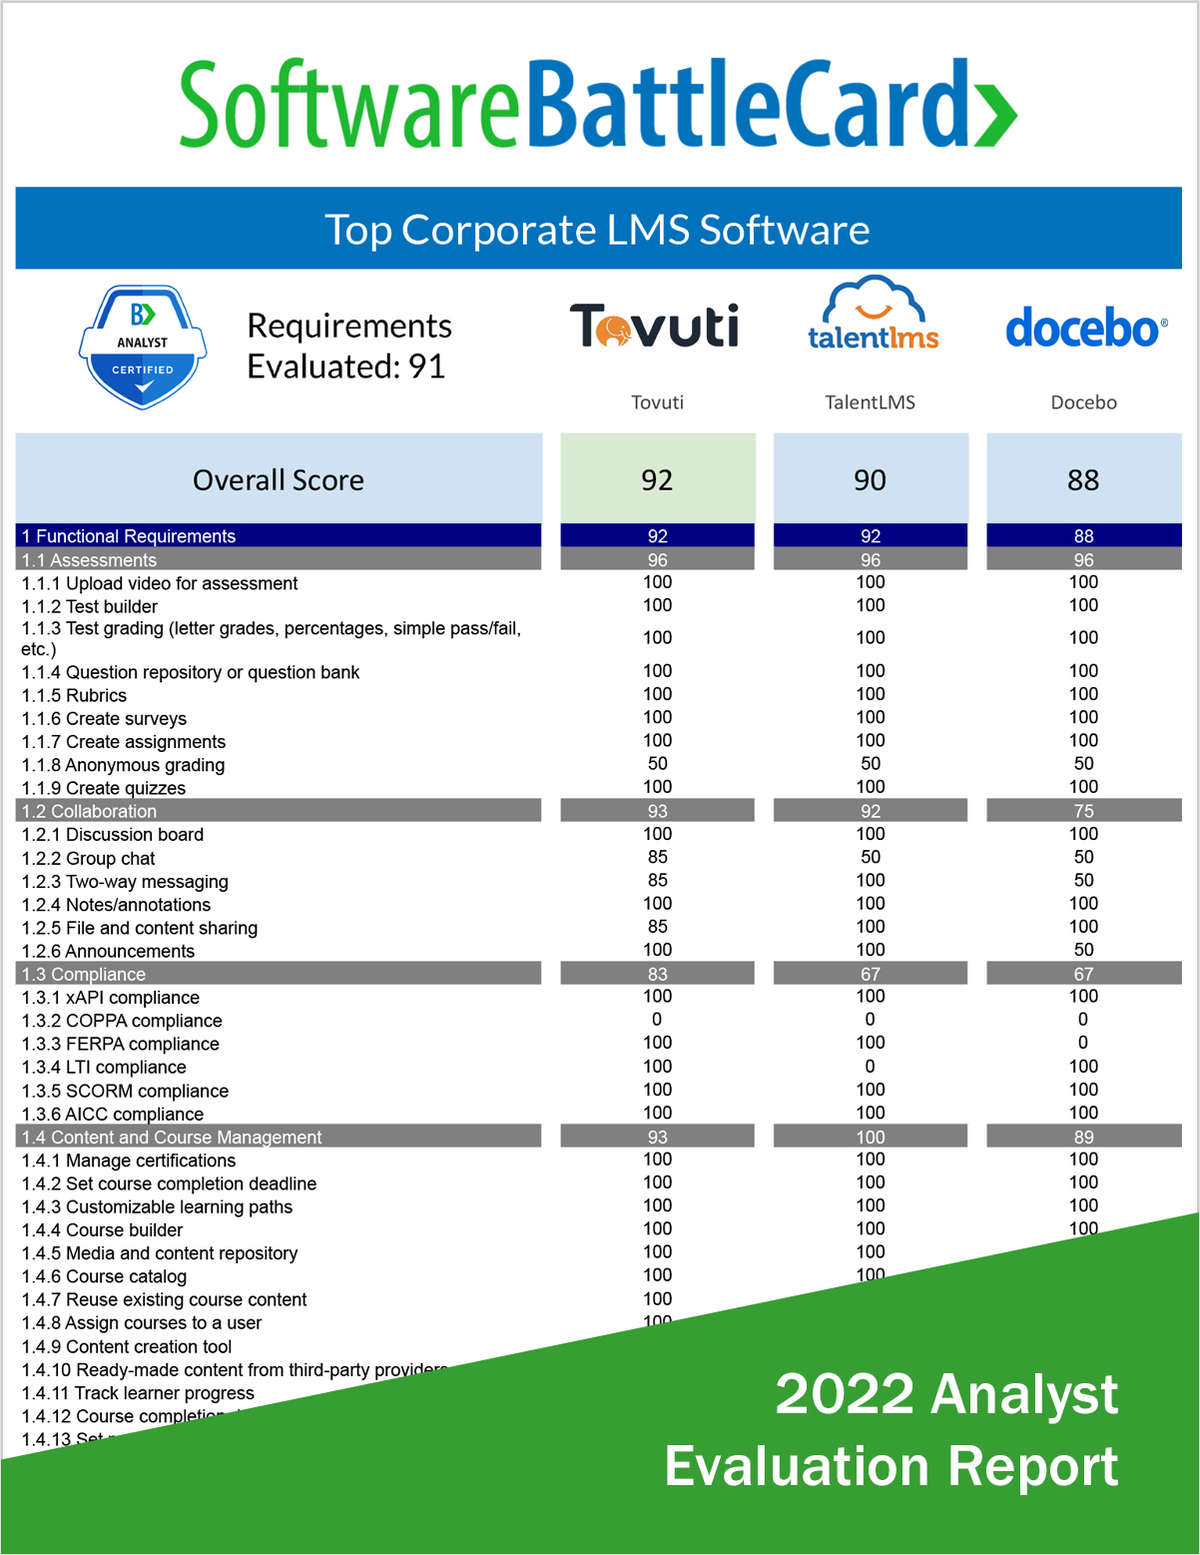 Top Corporate LMS Software BattleCard--Tovuti vs. TalentLMS vs. Docebo